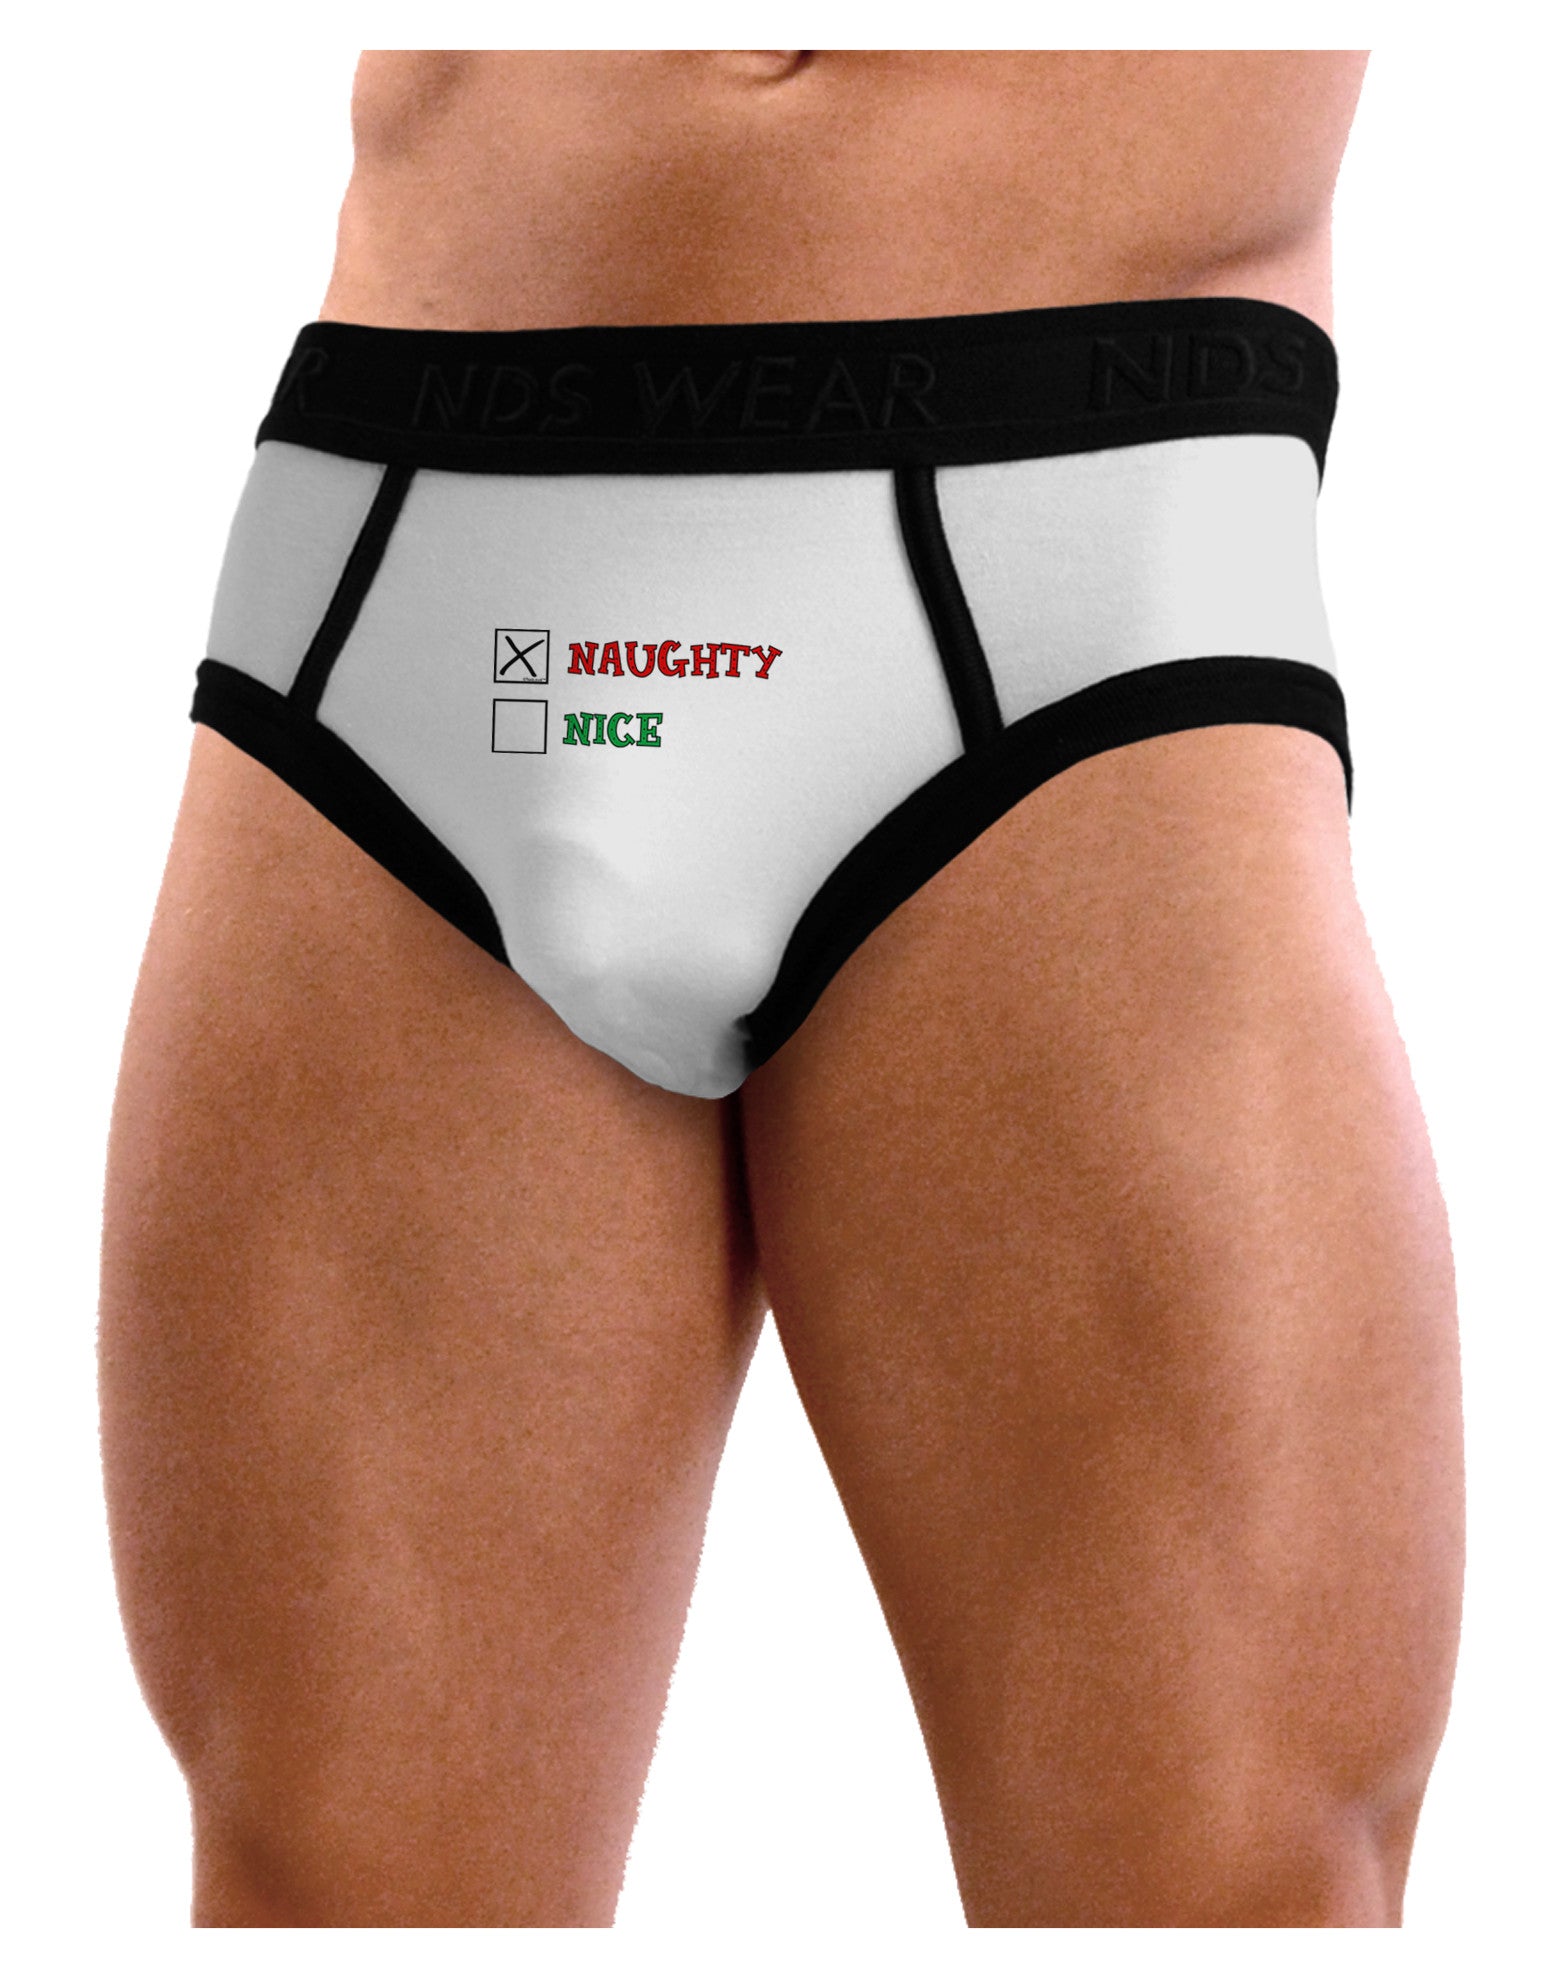 Naughty or Nice Christmas - Naughty Mens NDS Wear Briefs Underwear